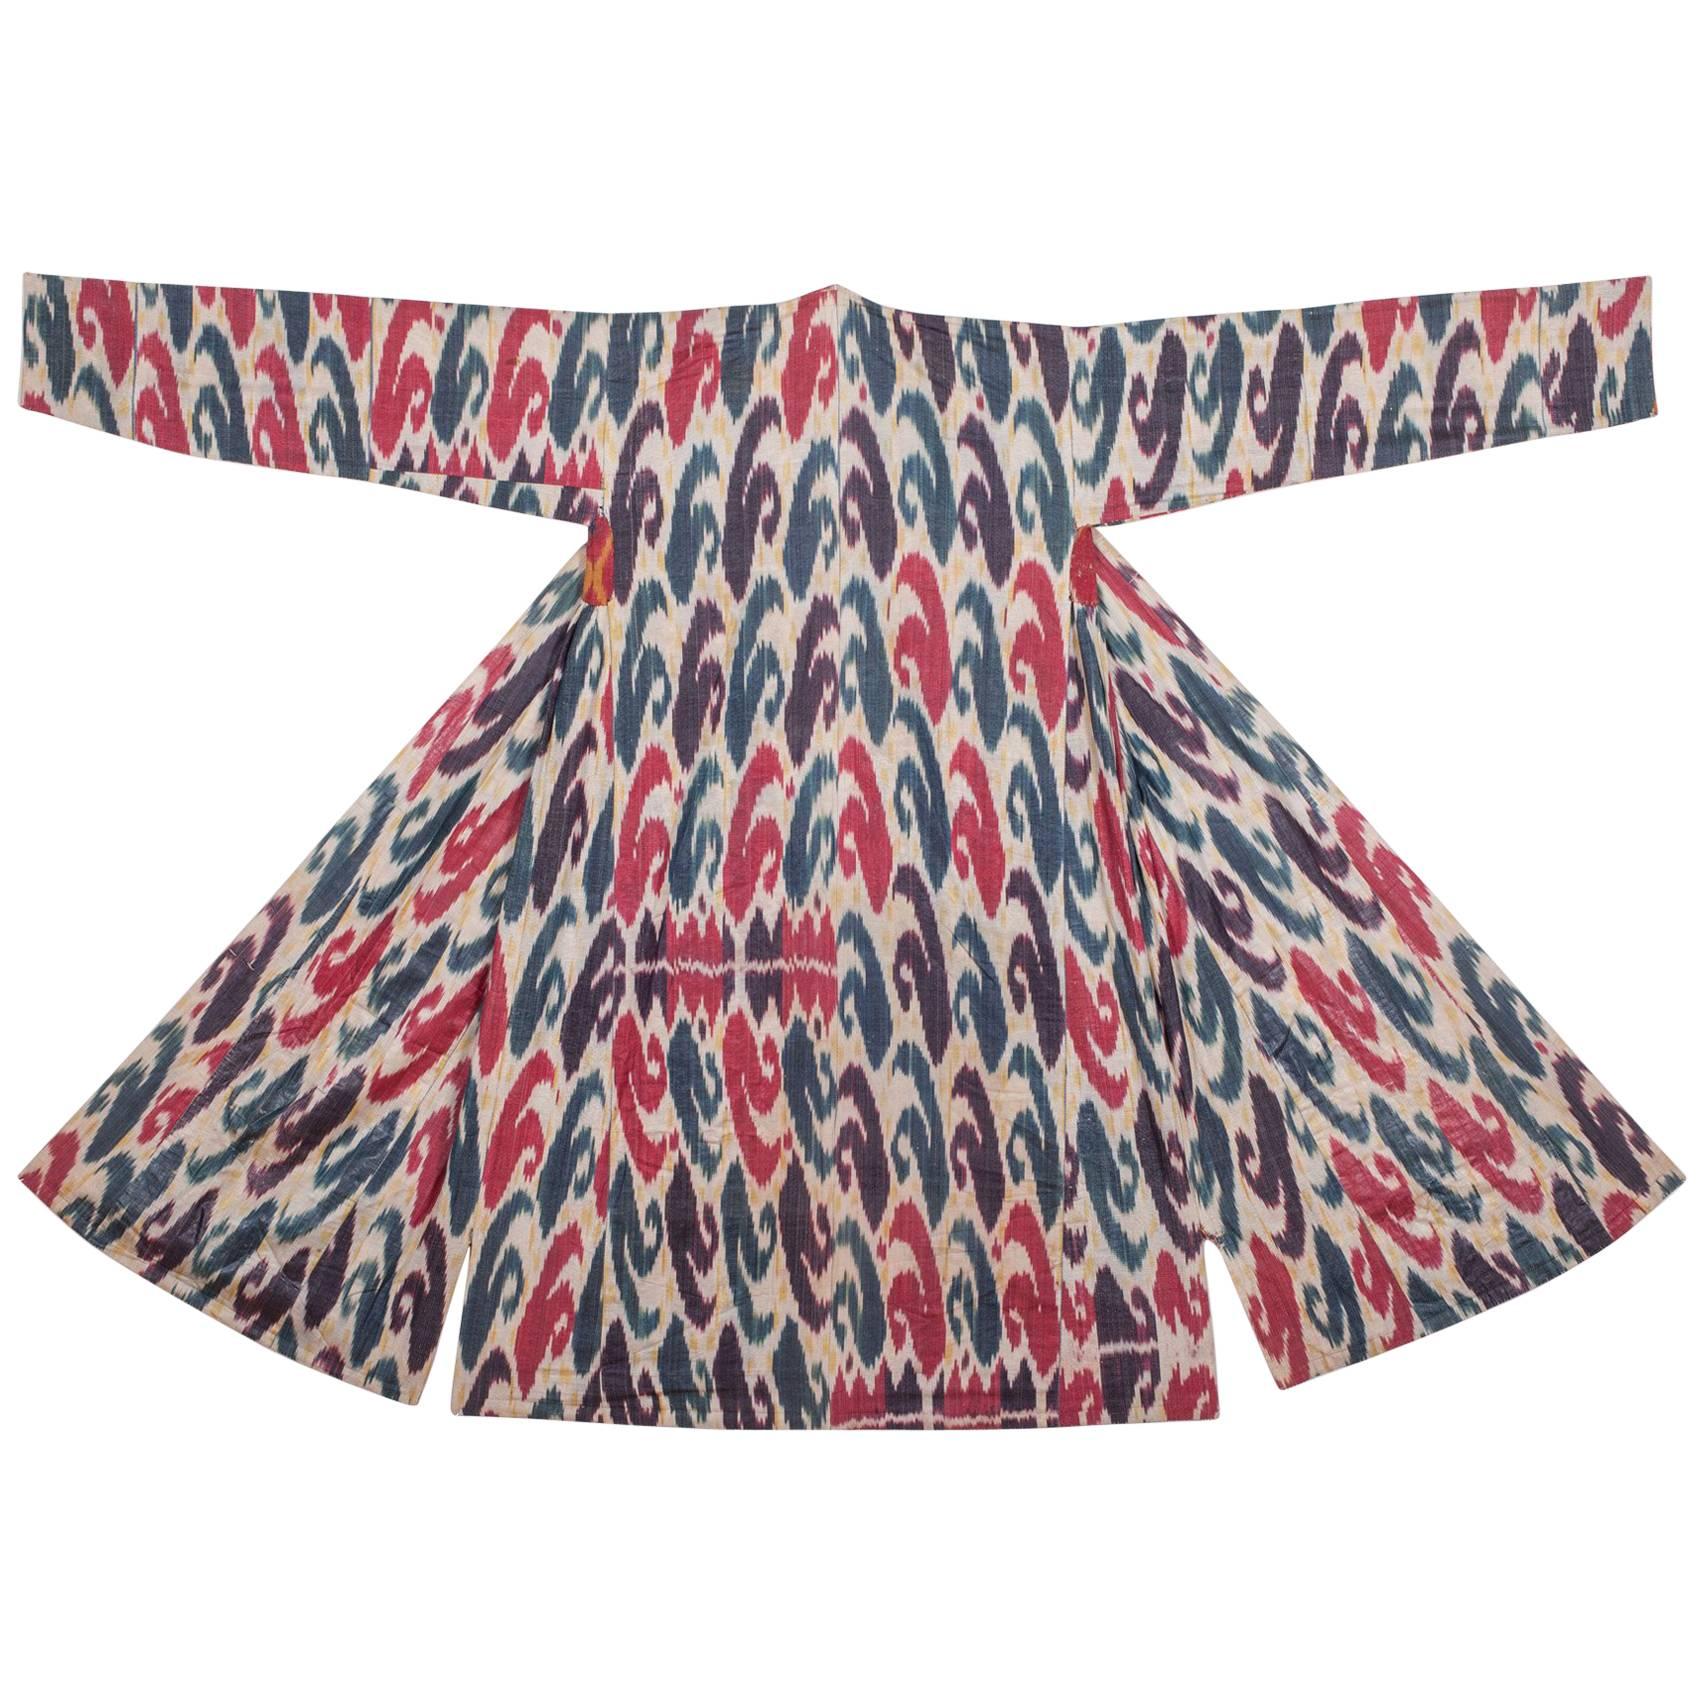 19th Century Silk and Cotton ‘Adras’ Chapan / Coat from Bukhara Uzbekistan For Sale